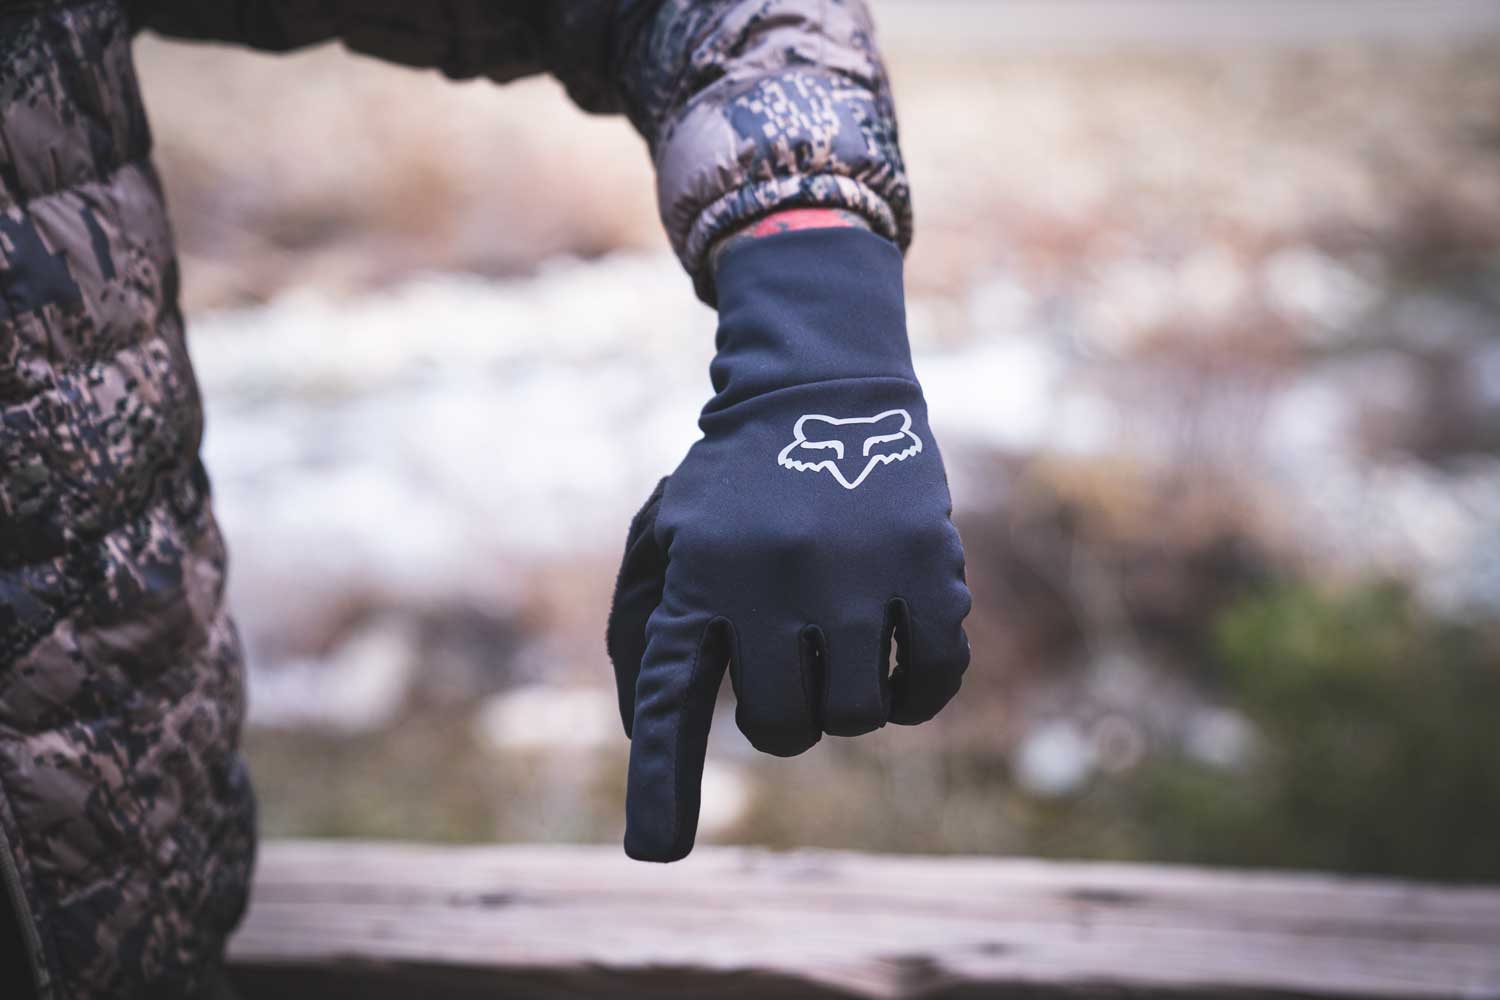 FOX RACING Youth Ranger Glove